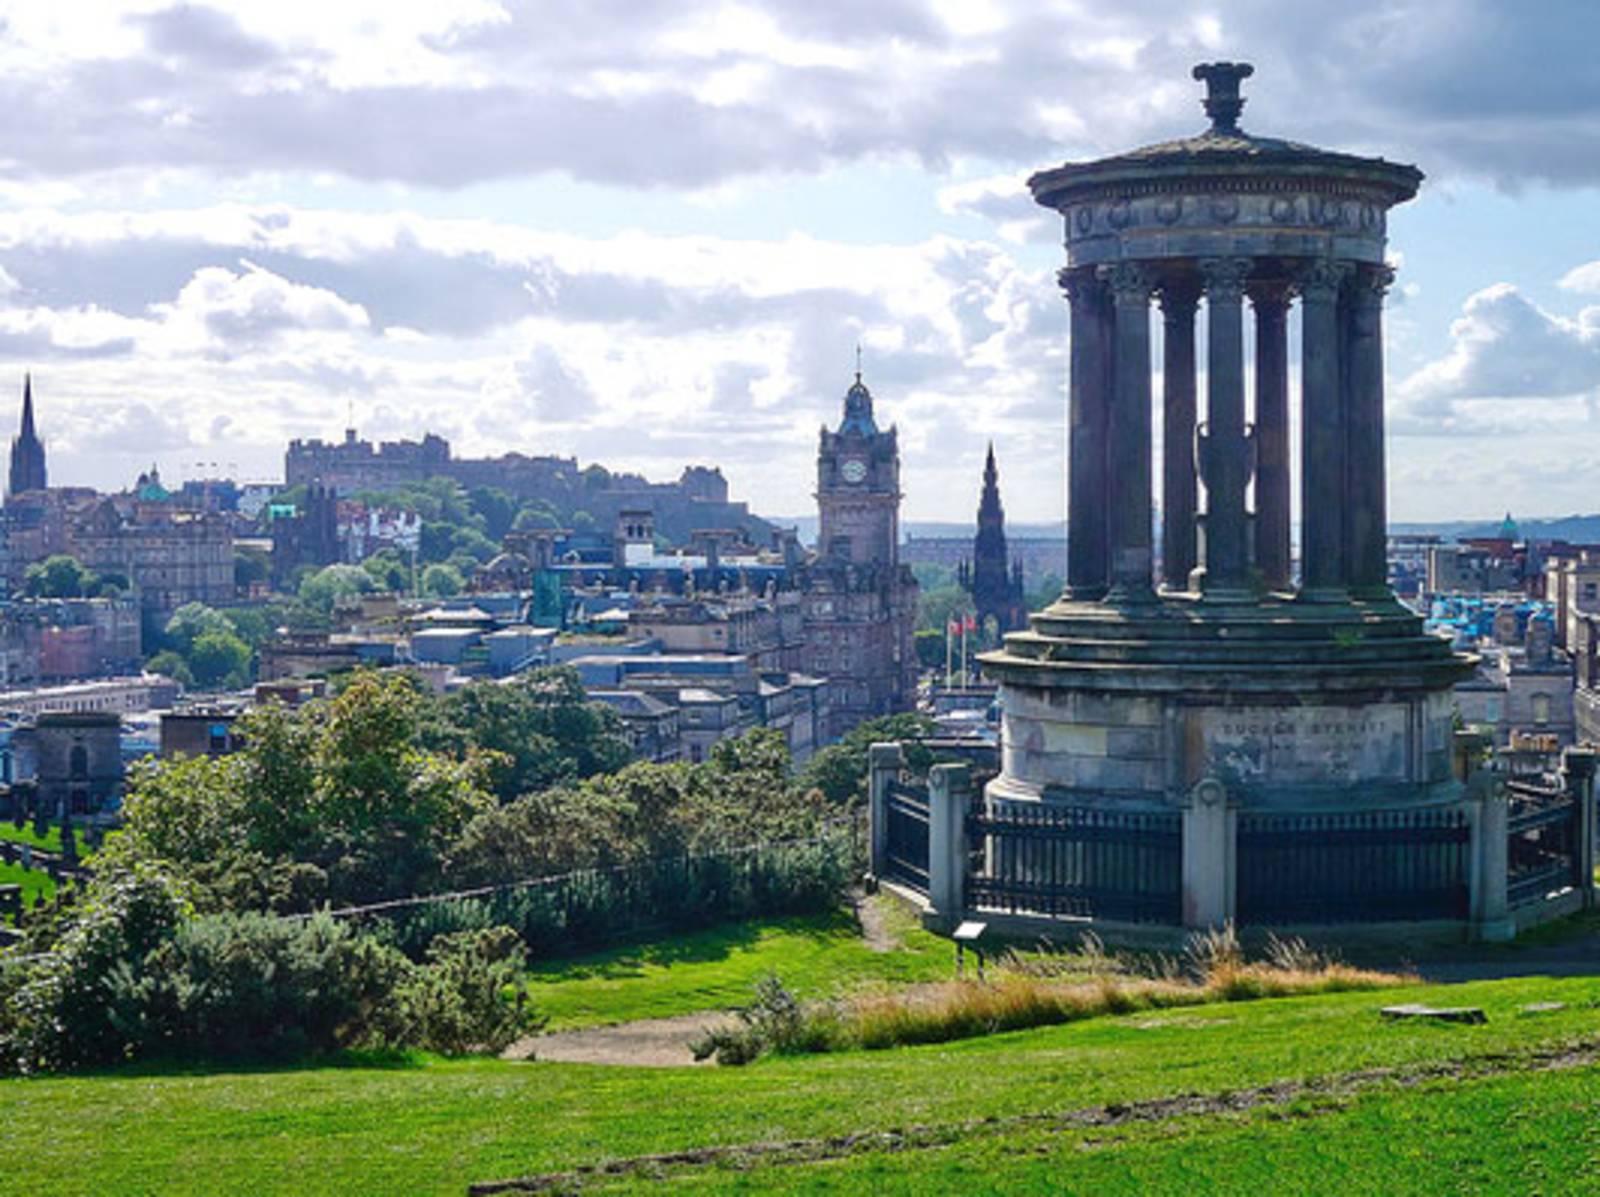 Edinburgh: City of Literature